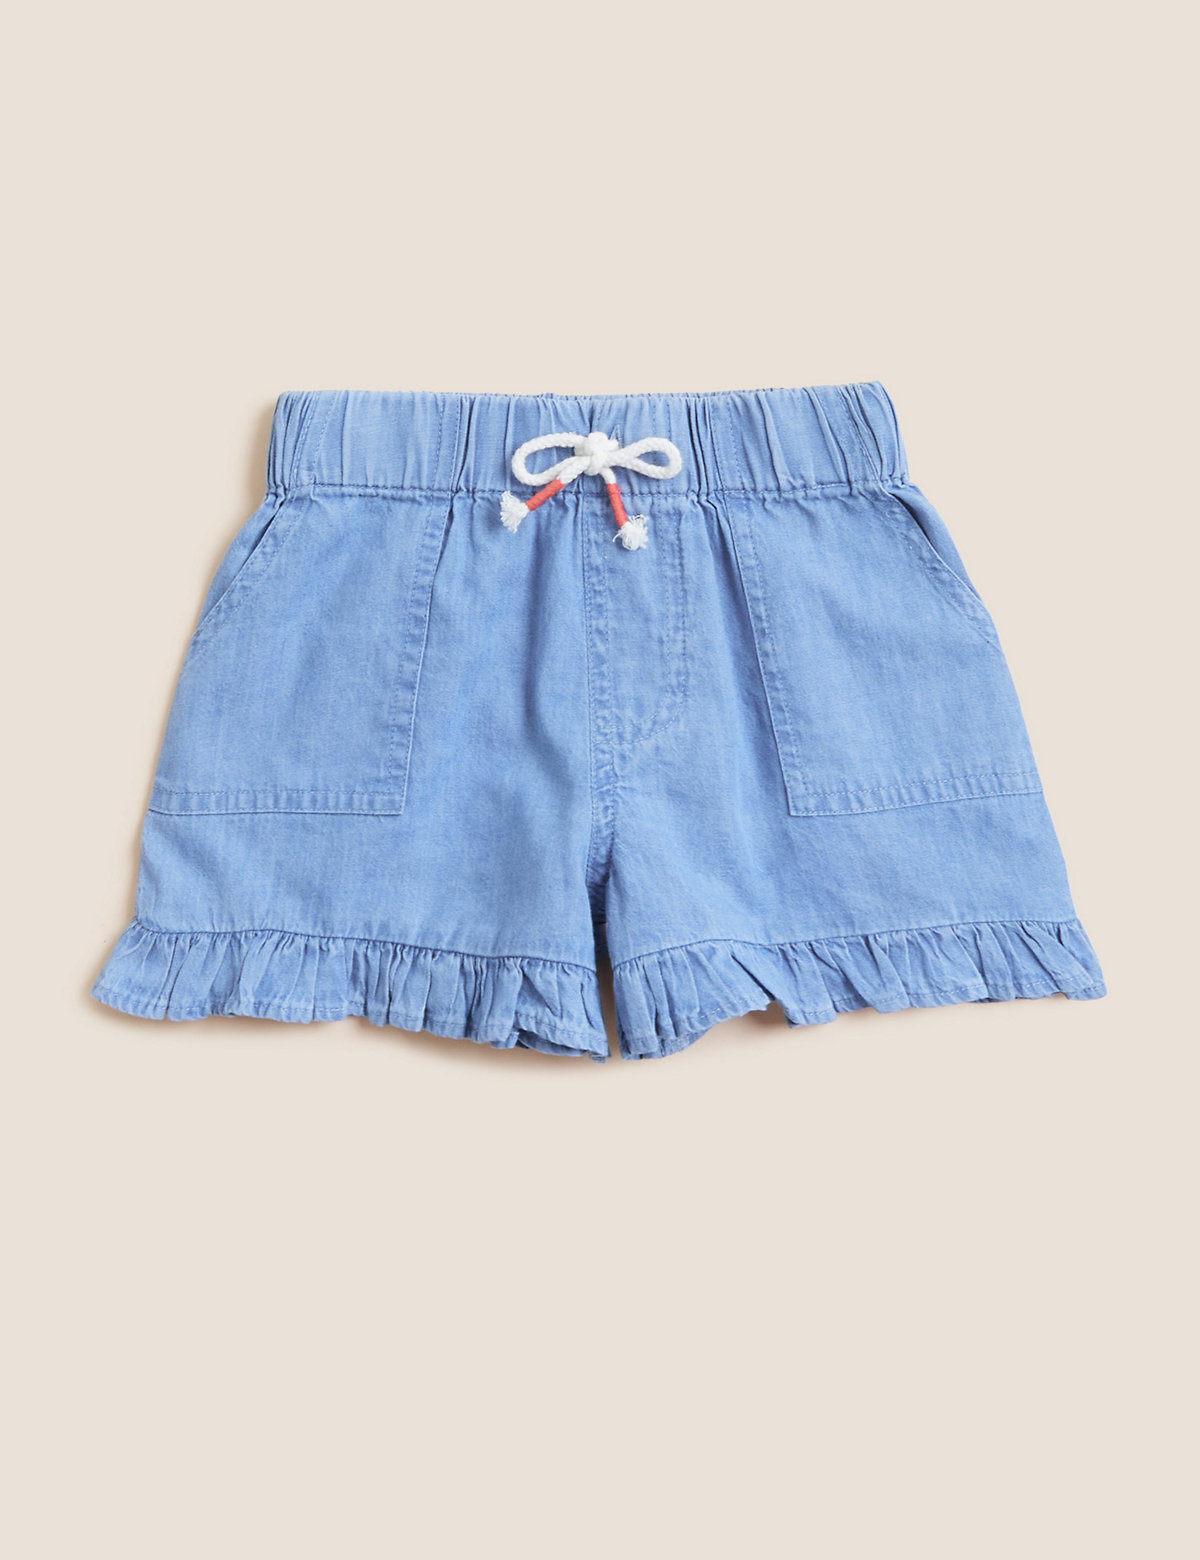 Pure Cotton Denim Shorts (2-7 Yrs)